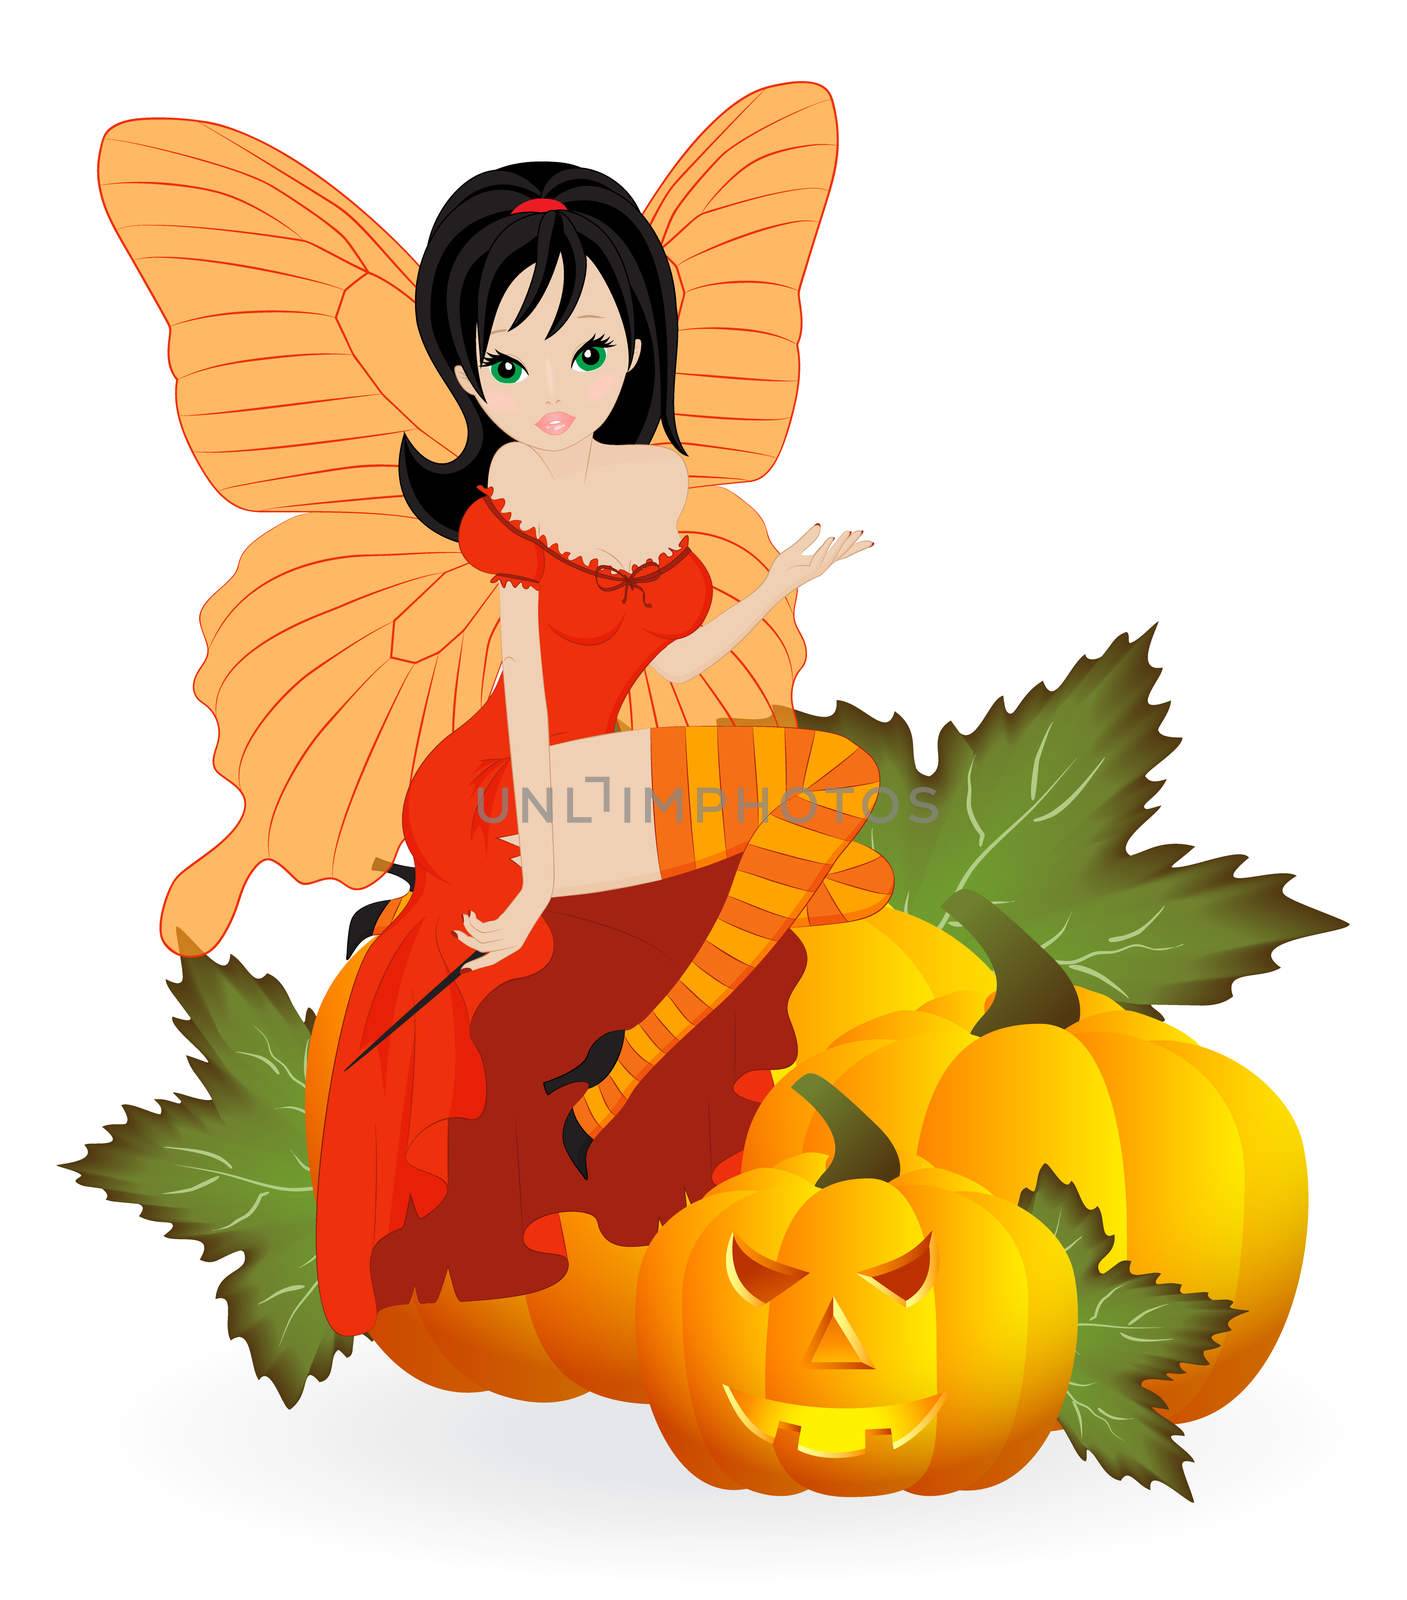 Autumn Fairy in the orange dress is sitting on a pumpkin